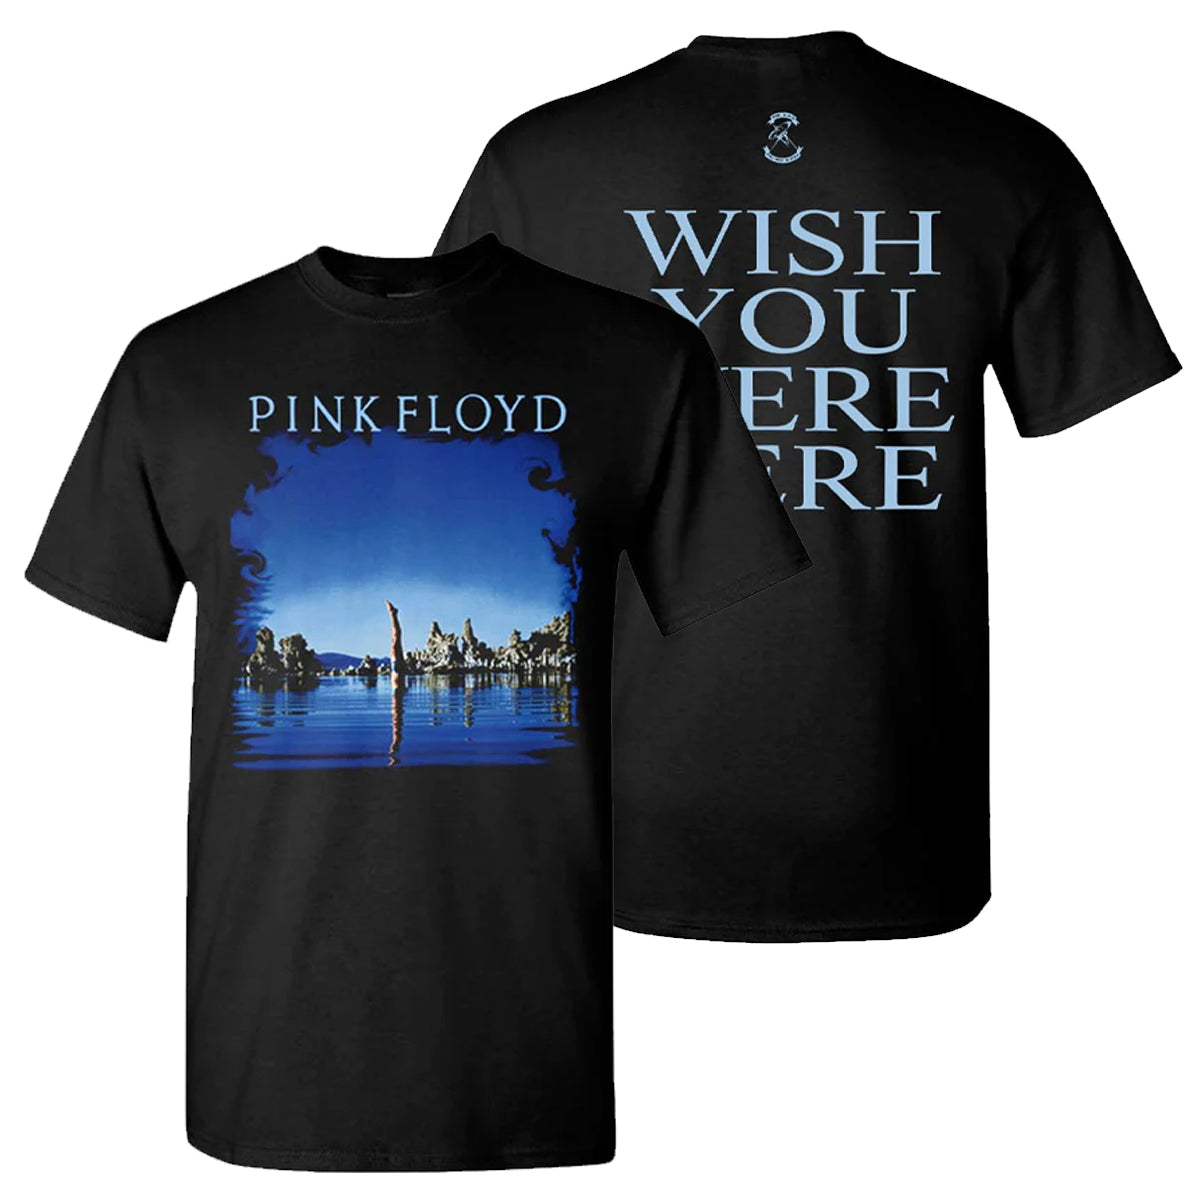 – PINK FLOYD Forward Were T-Shirt You Wish Merch Here